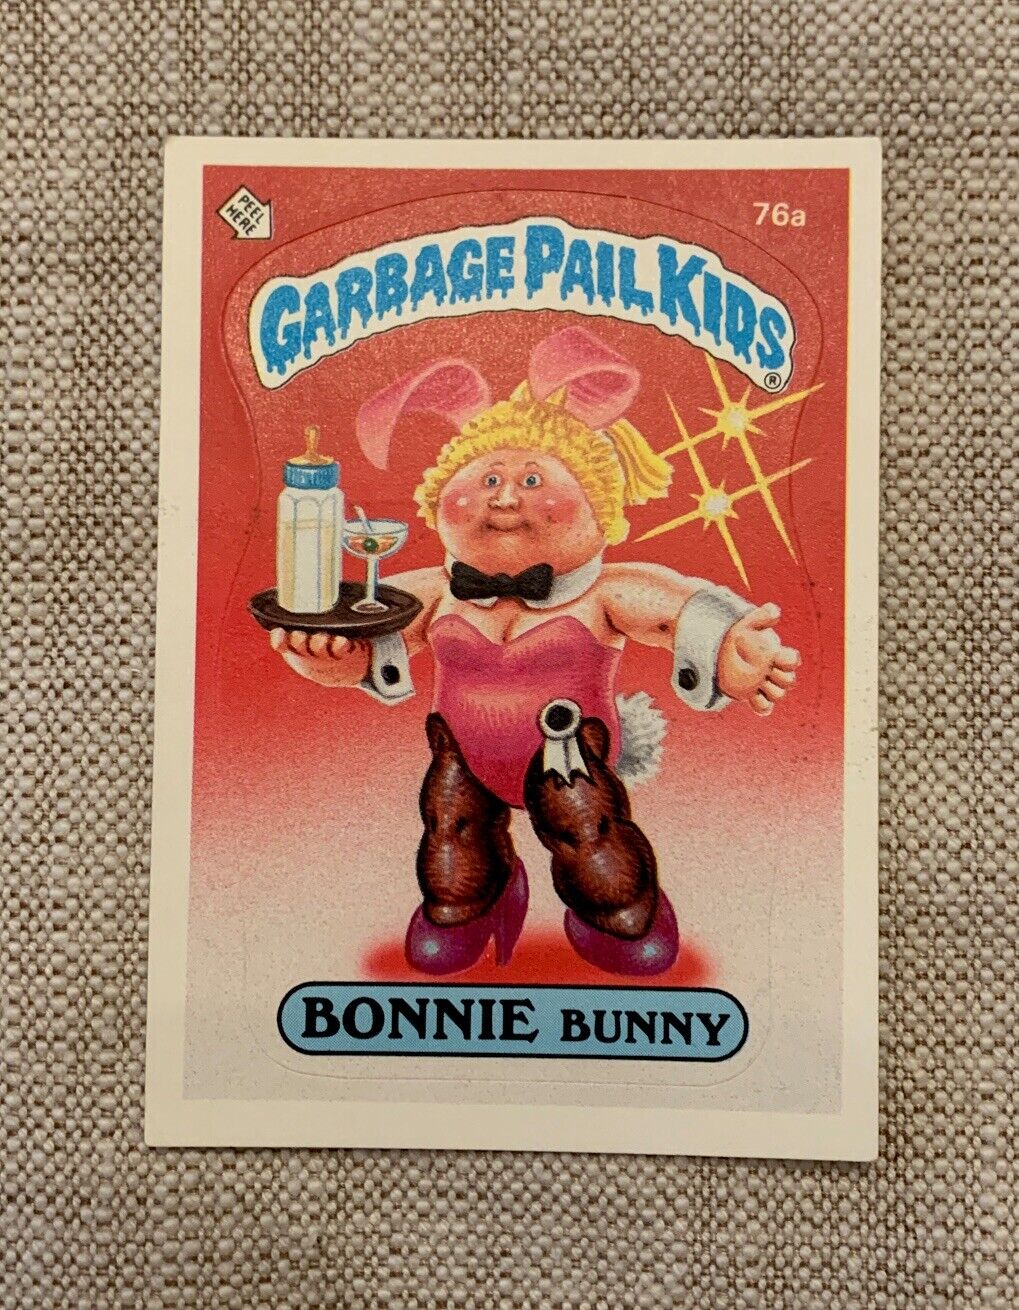 1985 Topps Garbage Pail Kid Bonnie Bunny R22146 